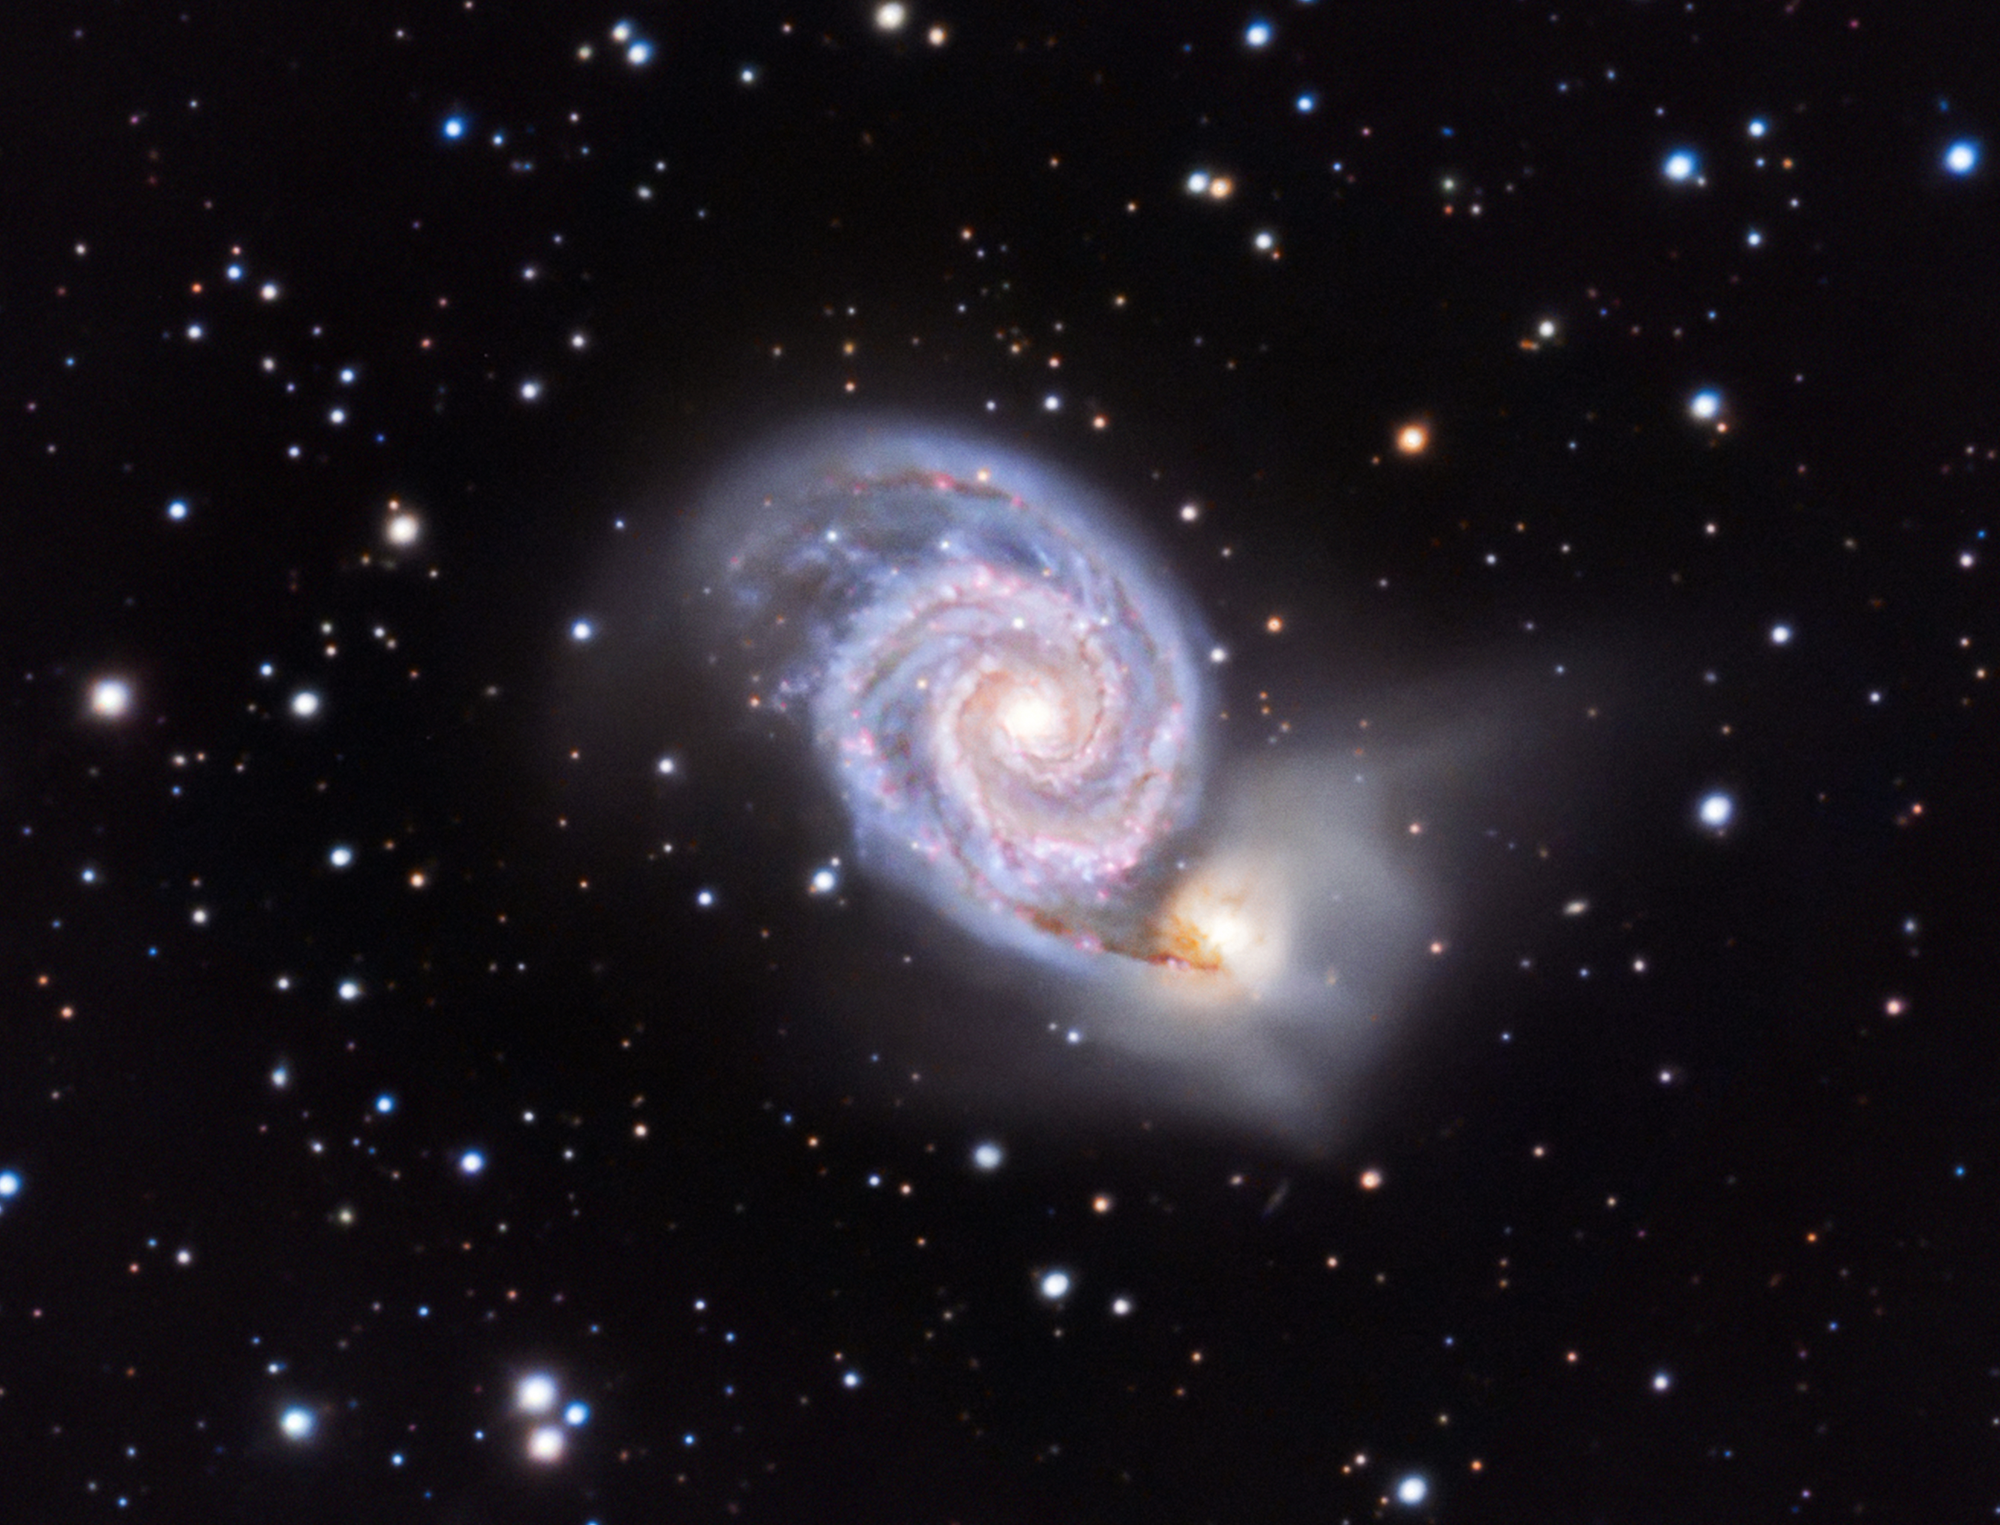 Whirlpool Galaxy M51 